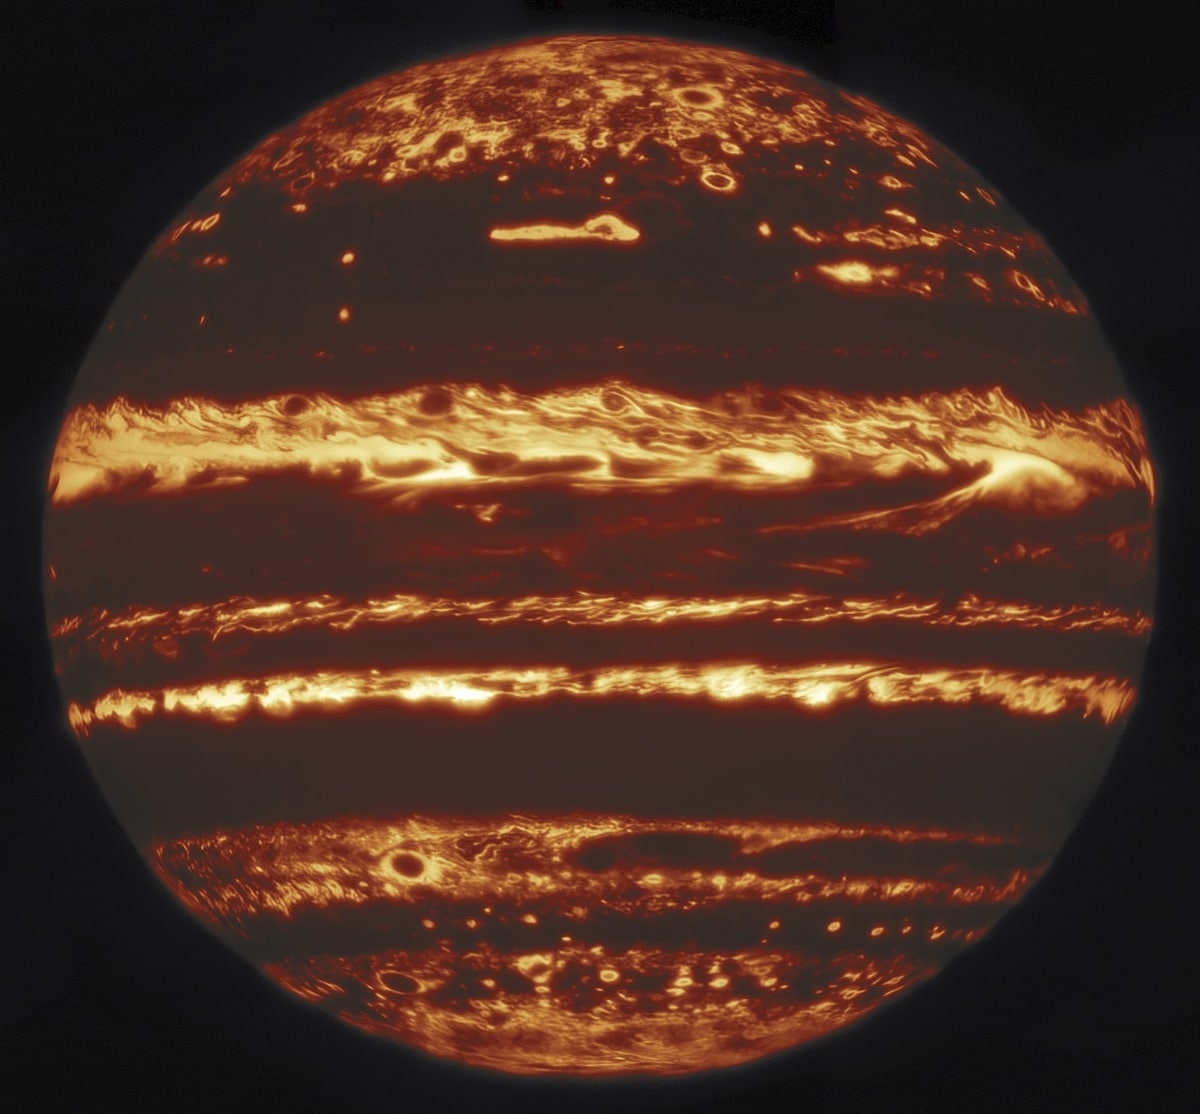 Jupiter in Infrared Light